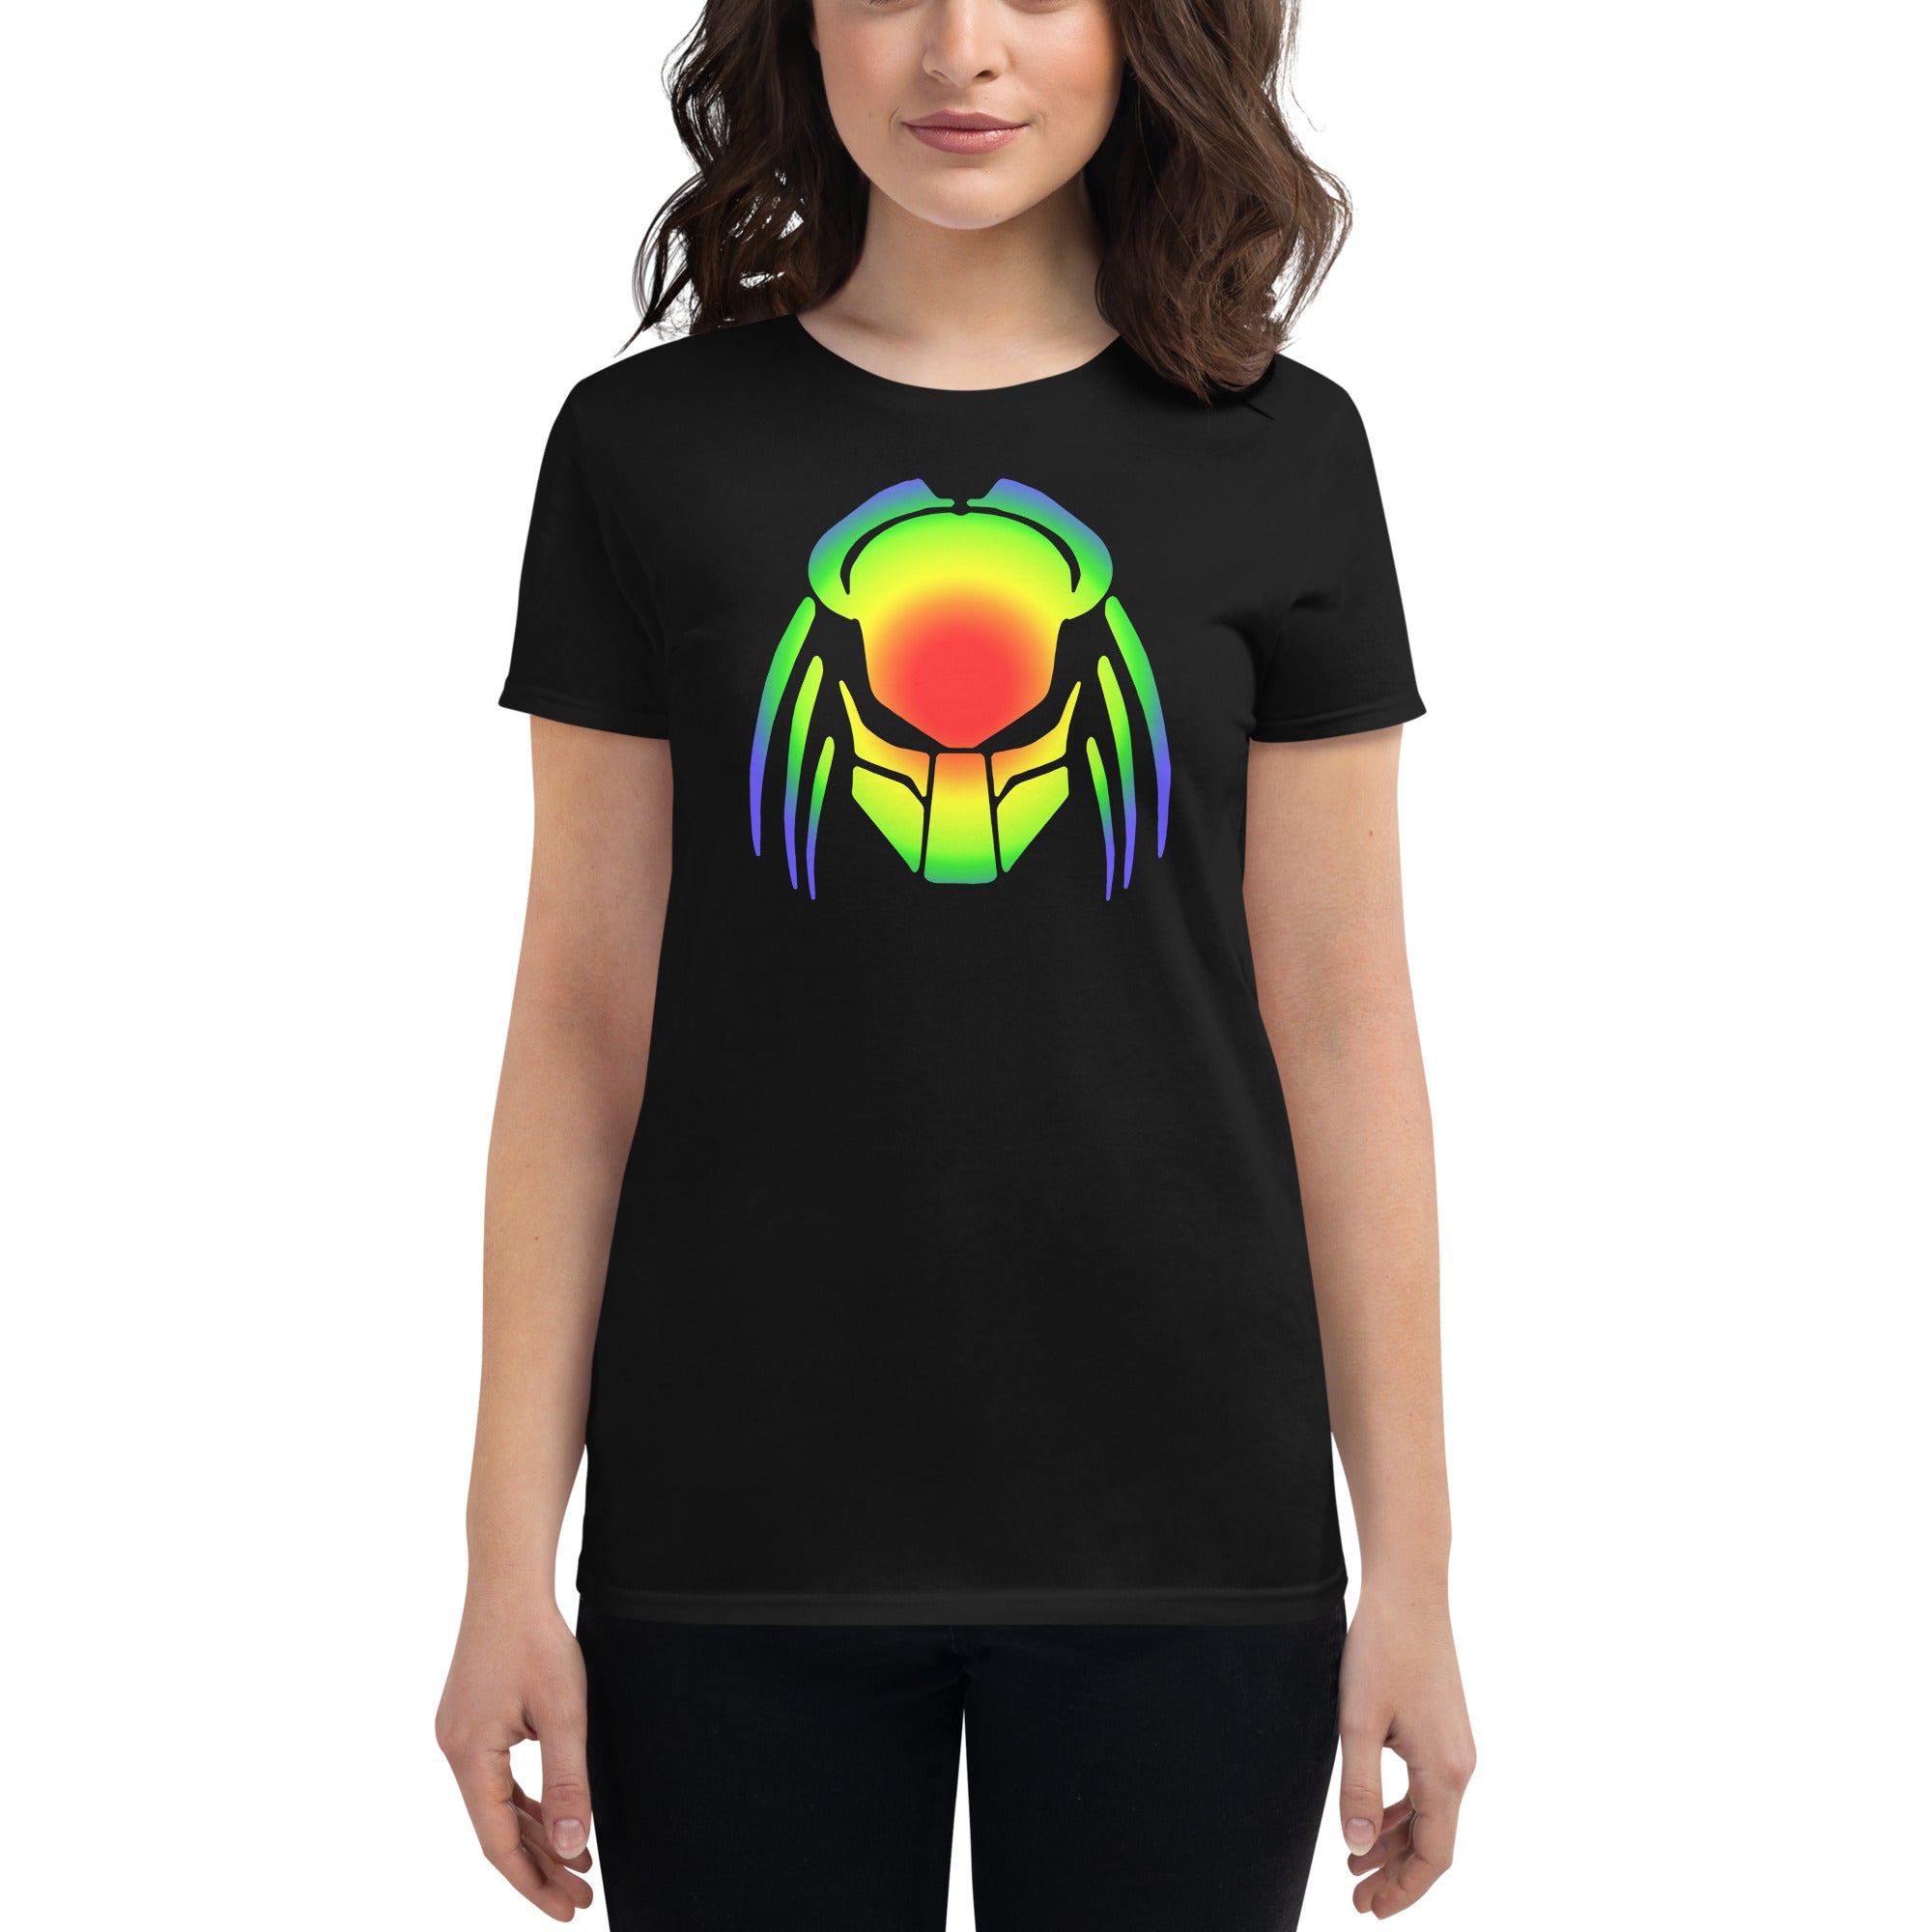 Heat Vision Predator Alien Hybrid Predalien Creature Women's Short Sleeve Babydoll T-shirt